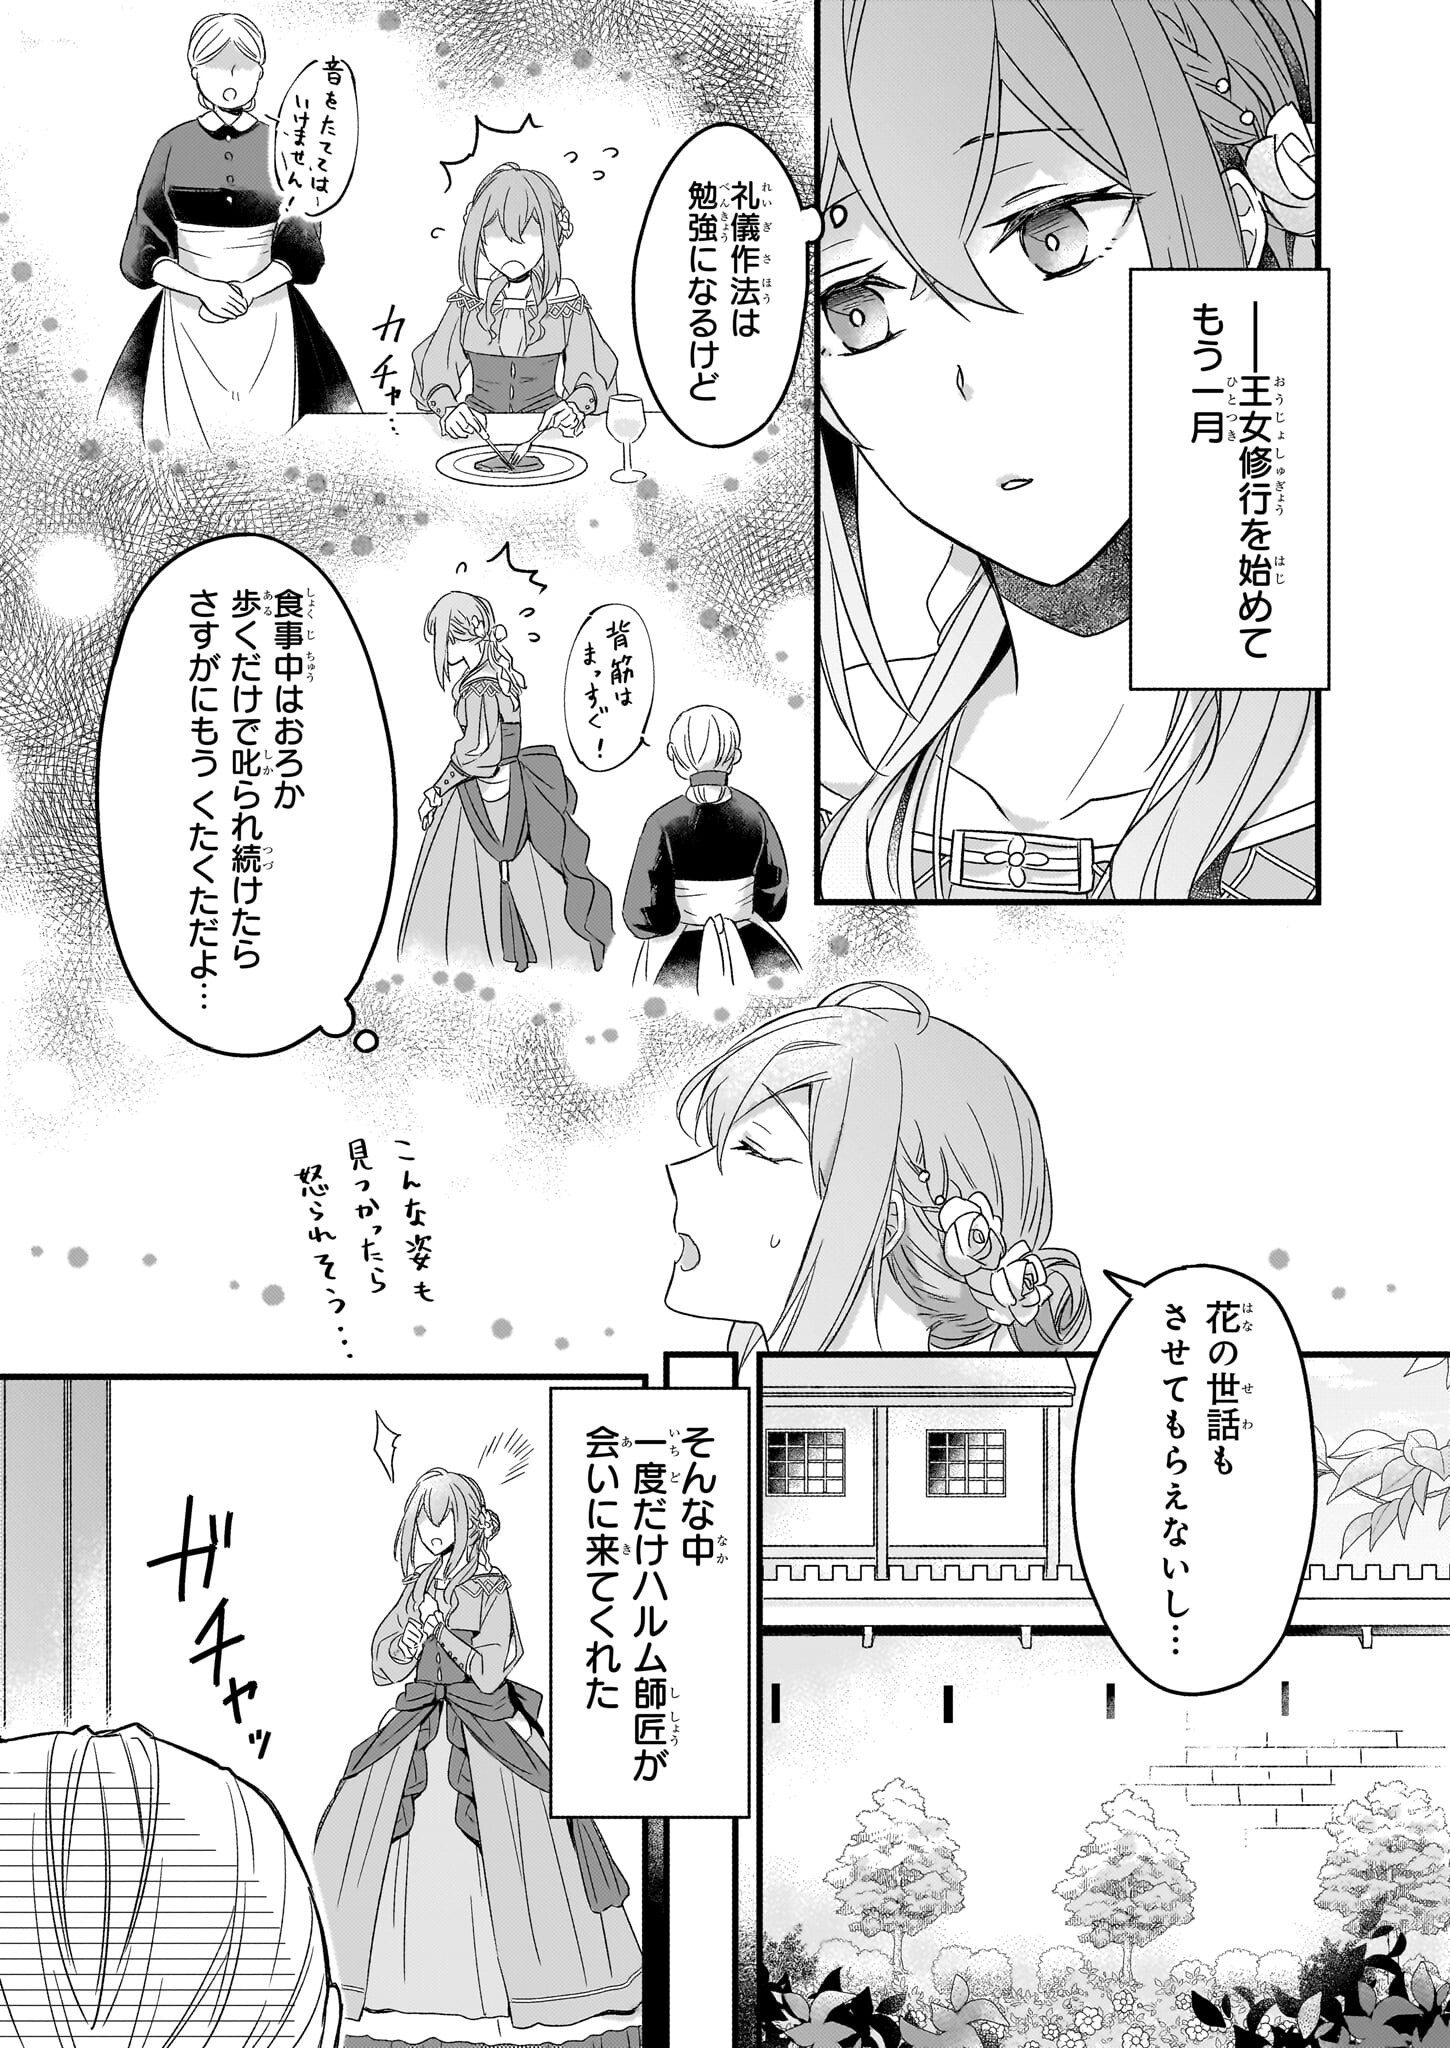 Gaikotsu Ou to Migawari no Oujo – Luna to Okubyou na Ousama - Chapter 6 - Page 2